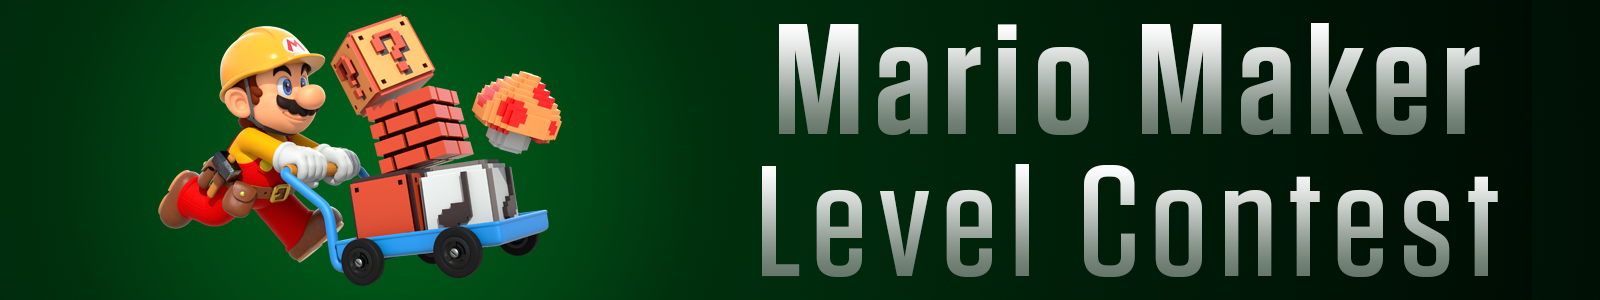 Mario Maker Level Contest